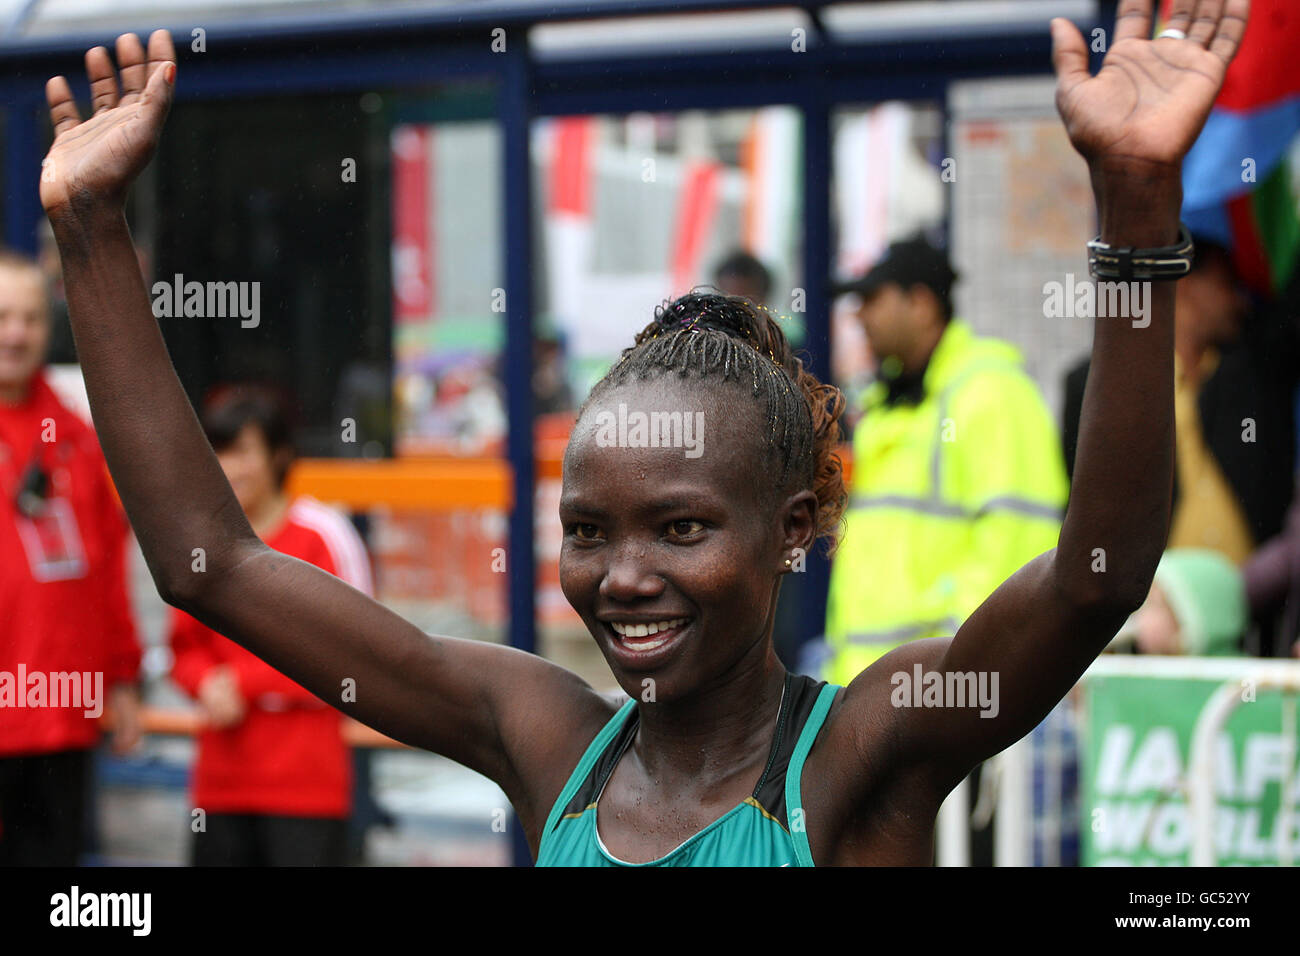 Atletica - EDF Energy Birmingham Mezza Maratona. Mary Jepkosgei Keitany dal Kenya celebra la vittoria della Mezza Maratona femminile di Birmingham dedicata all'energia EDF. Foto Stock